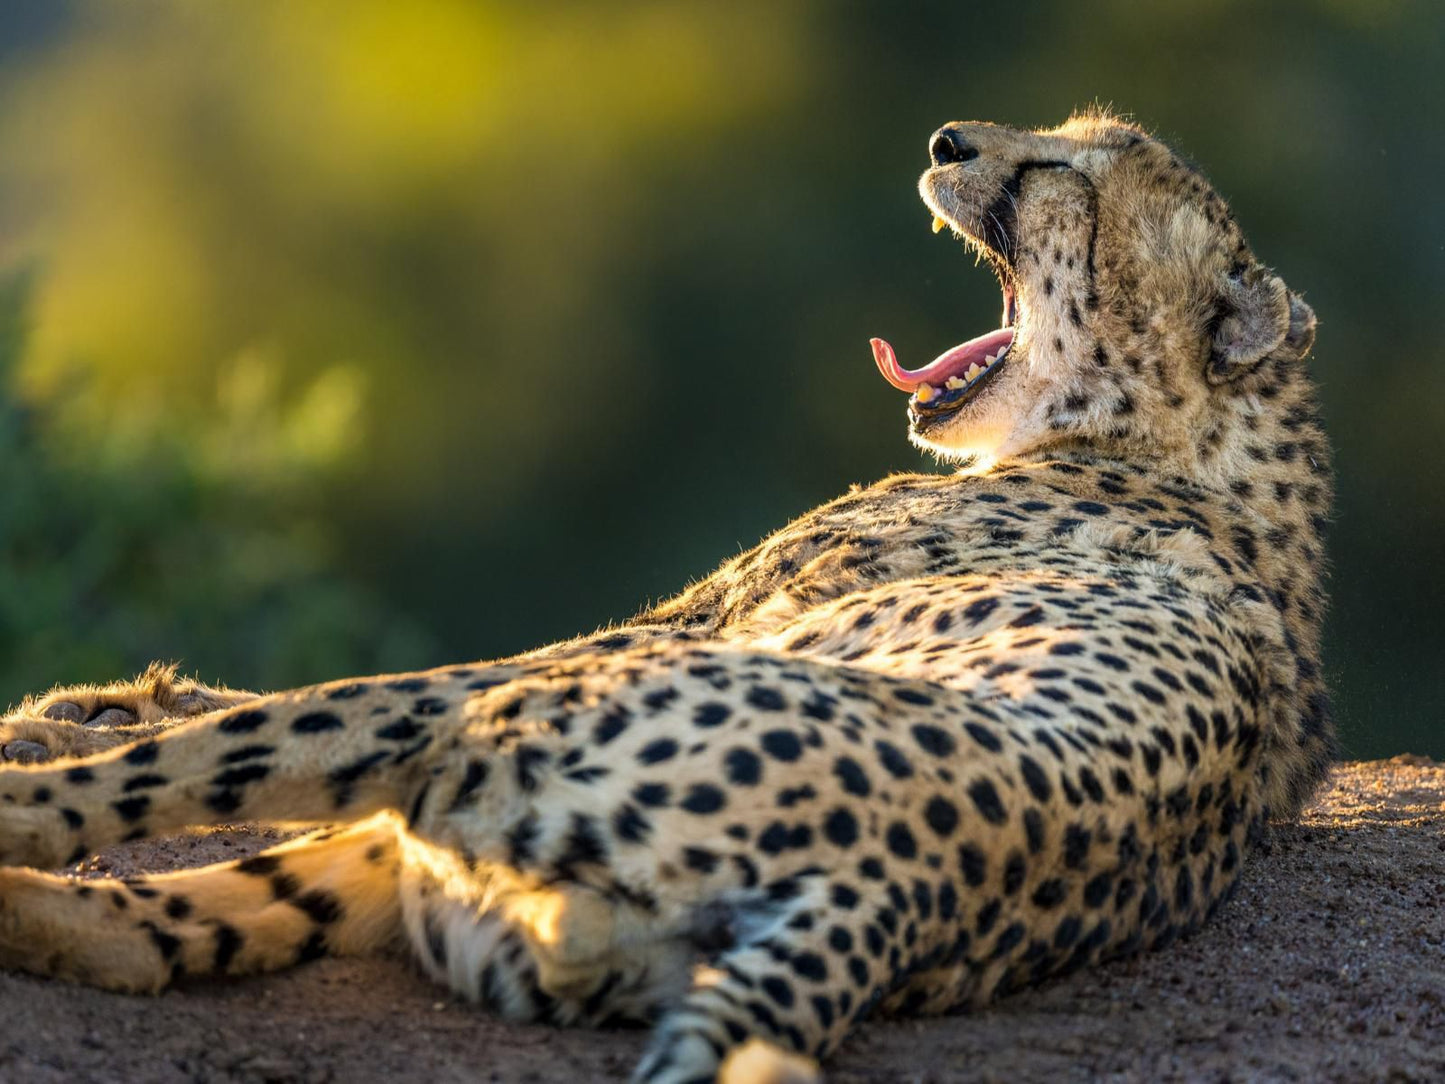 Tswalu Kalahari Reserve Hotazel Northern Cape South Africa Cheetah, Mammal, Animal, Big Cat, Predator